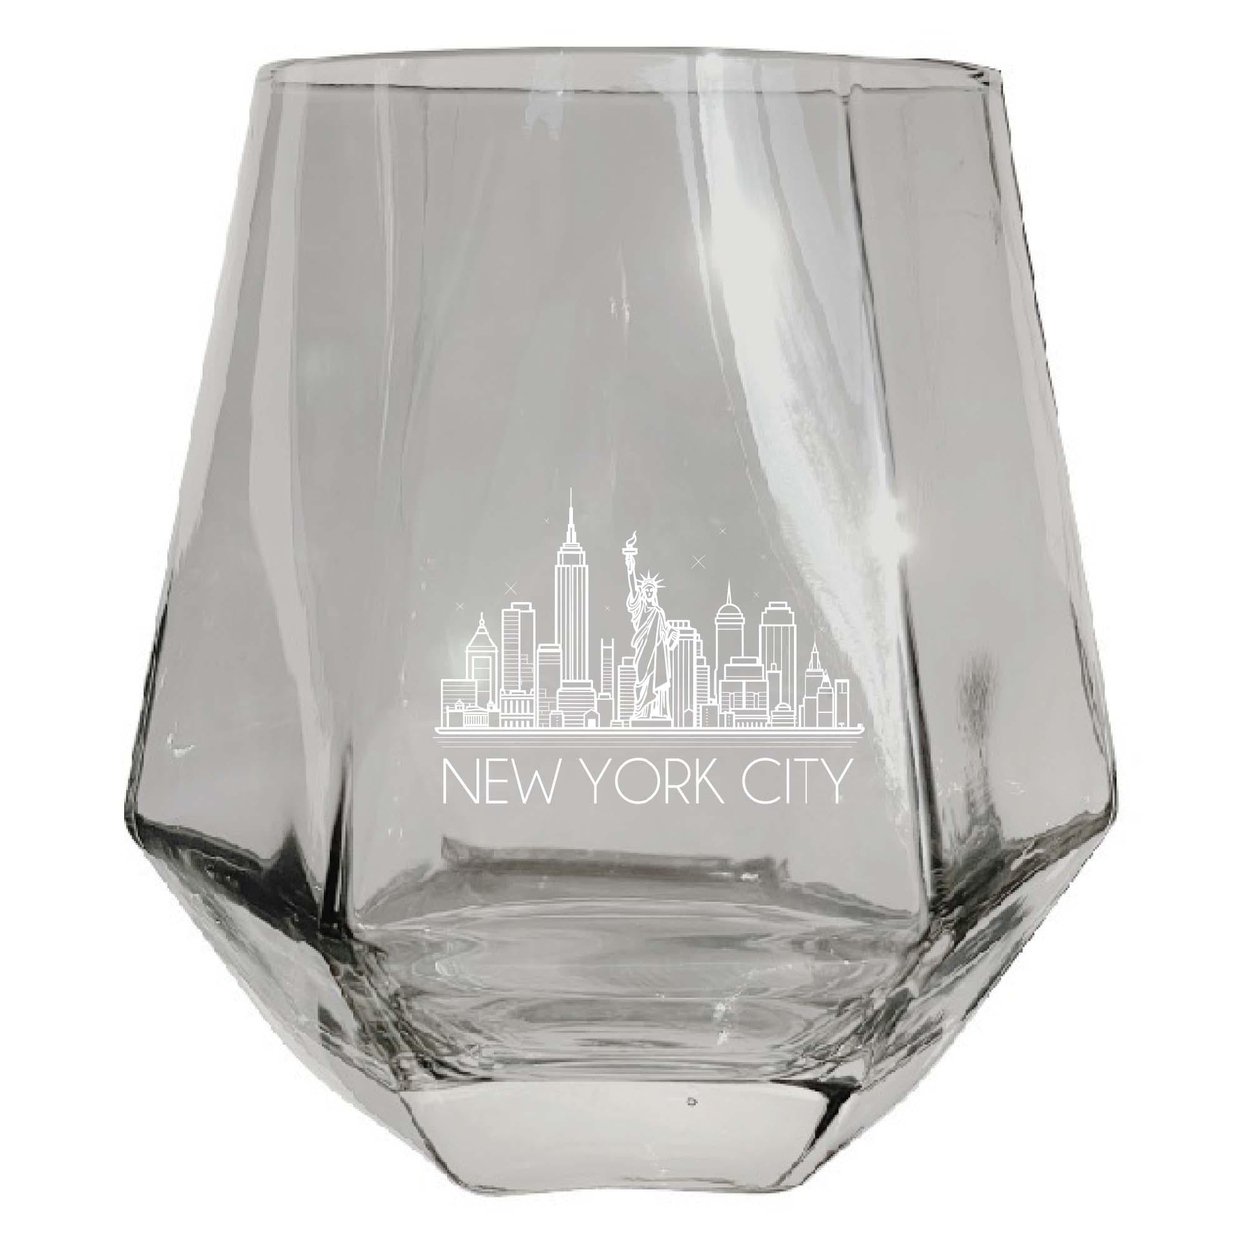 New York City Souvenir Wine Glass EngravedDiamond 15 Oz - Gray,,4-Pack